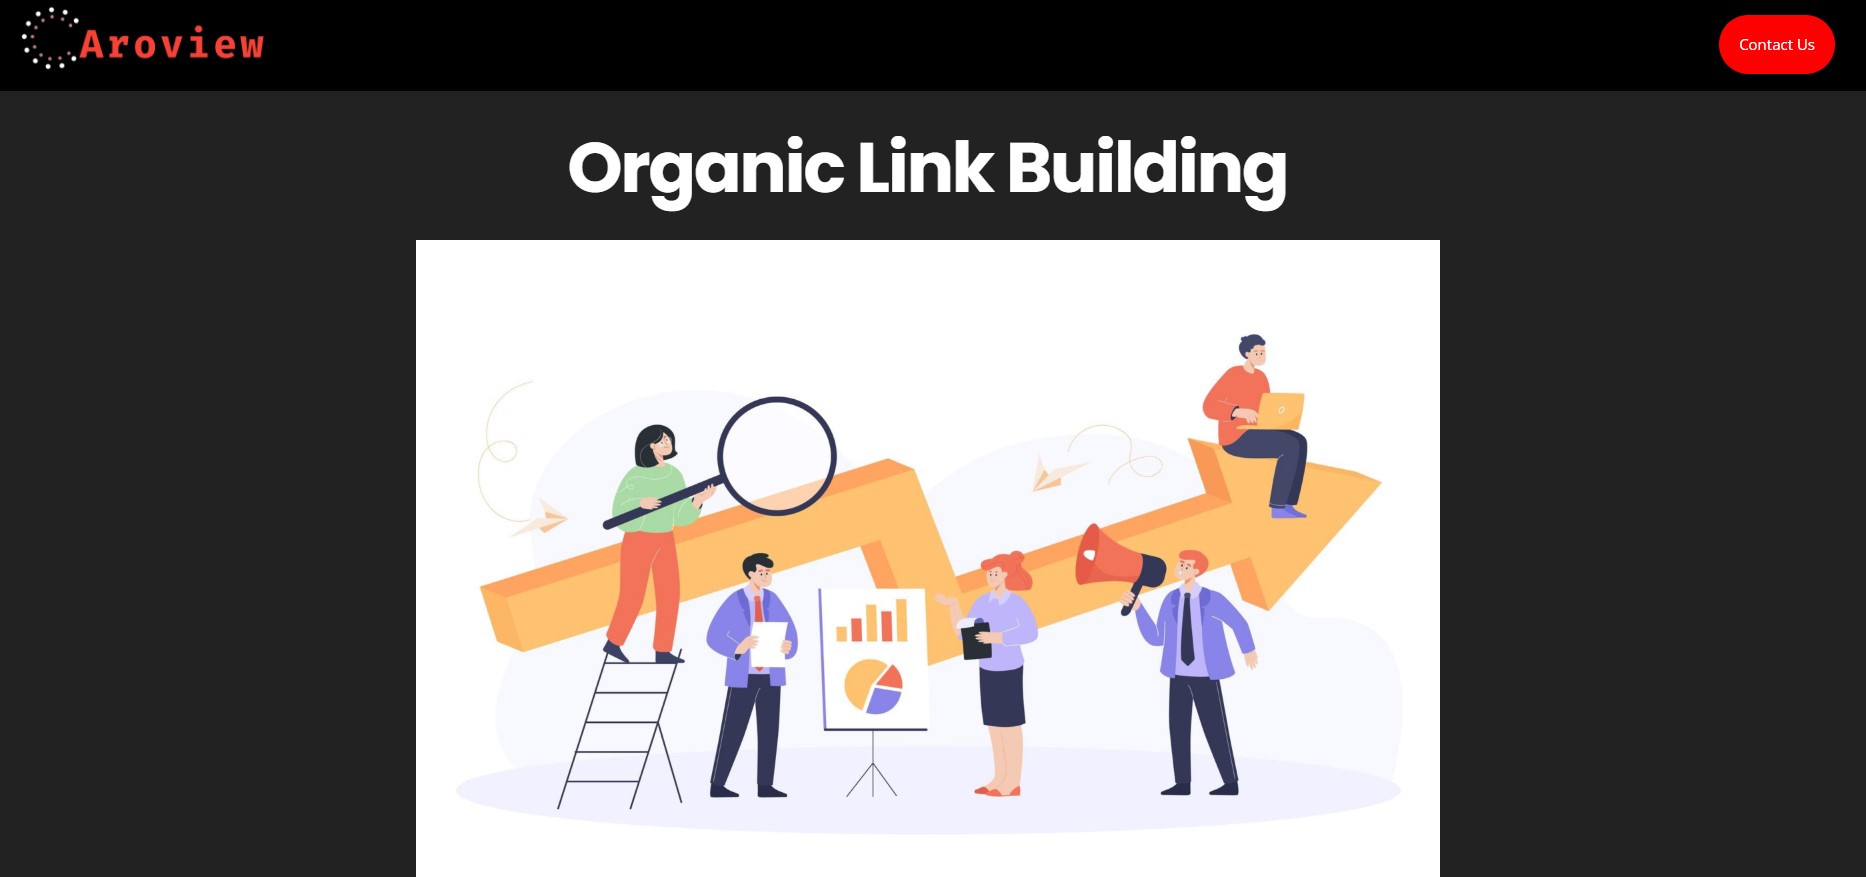 Organic link building